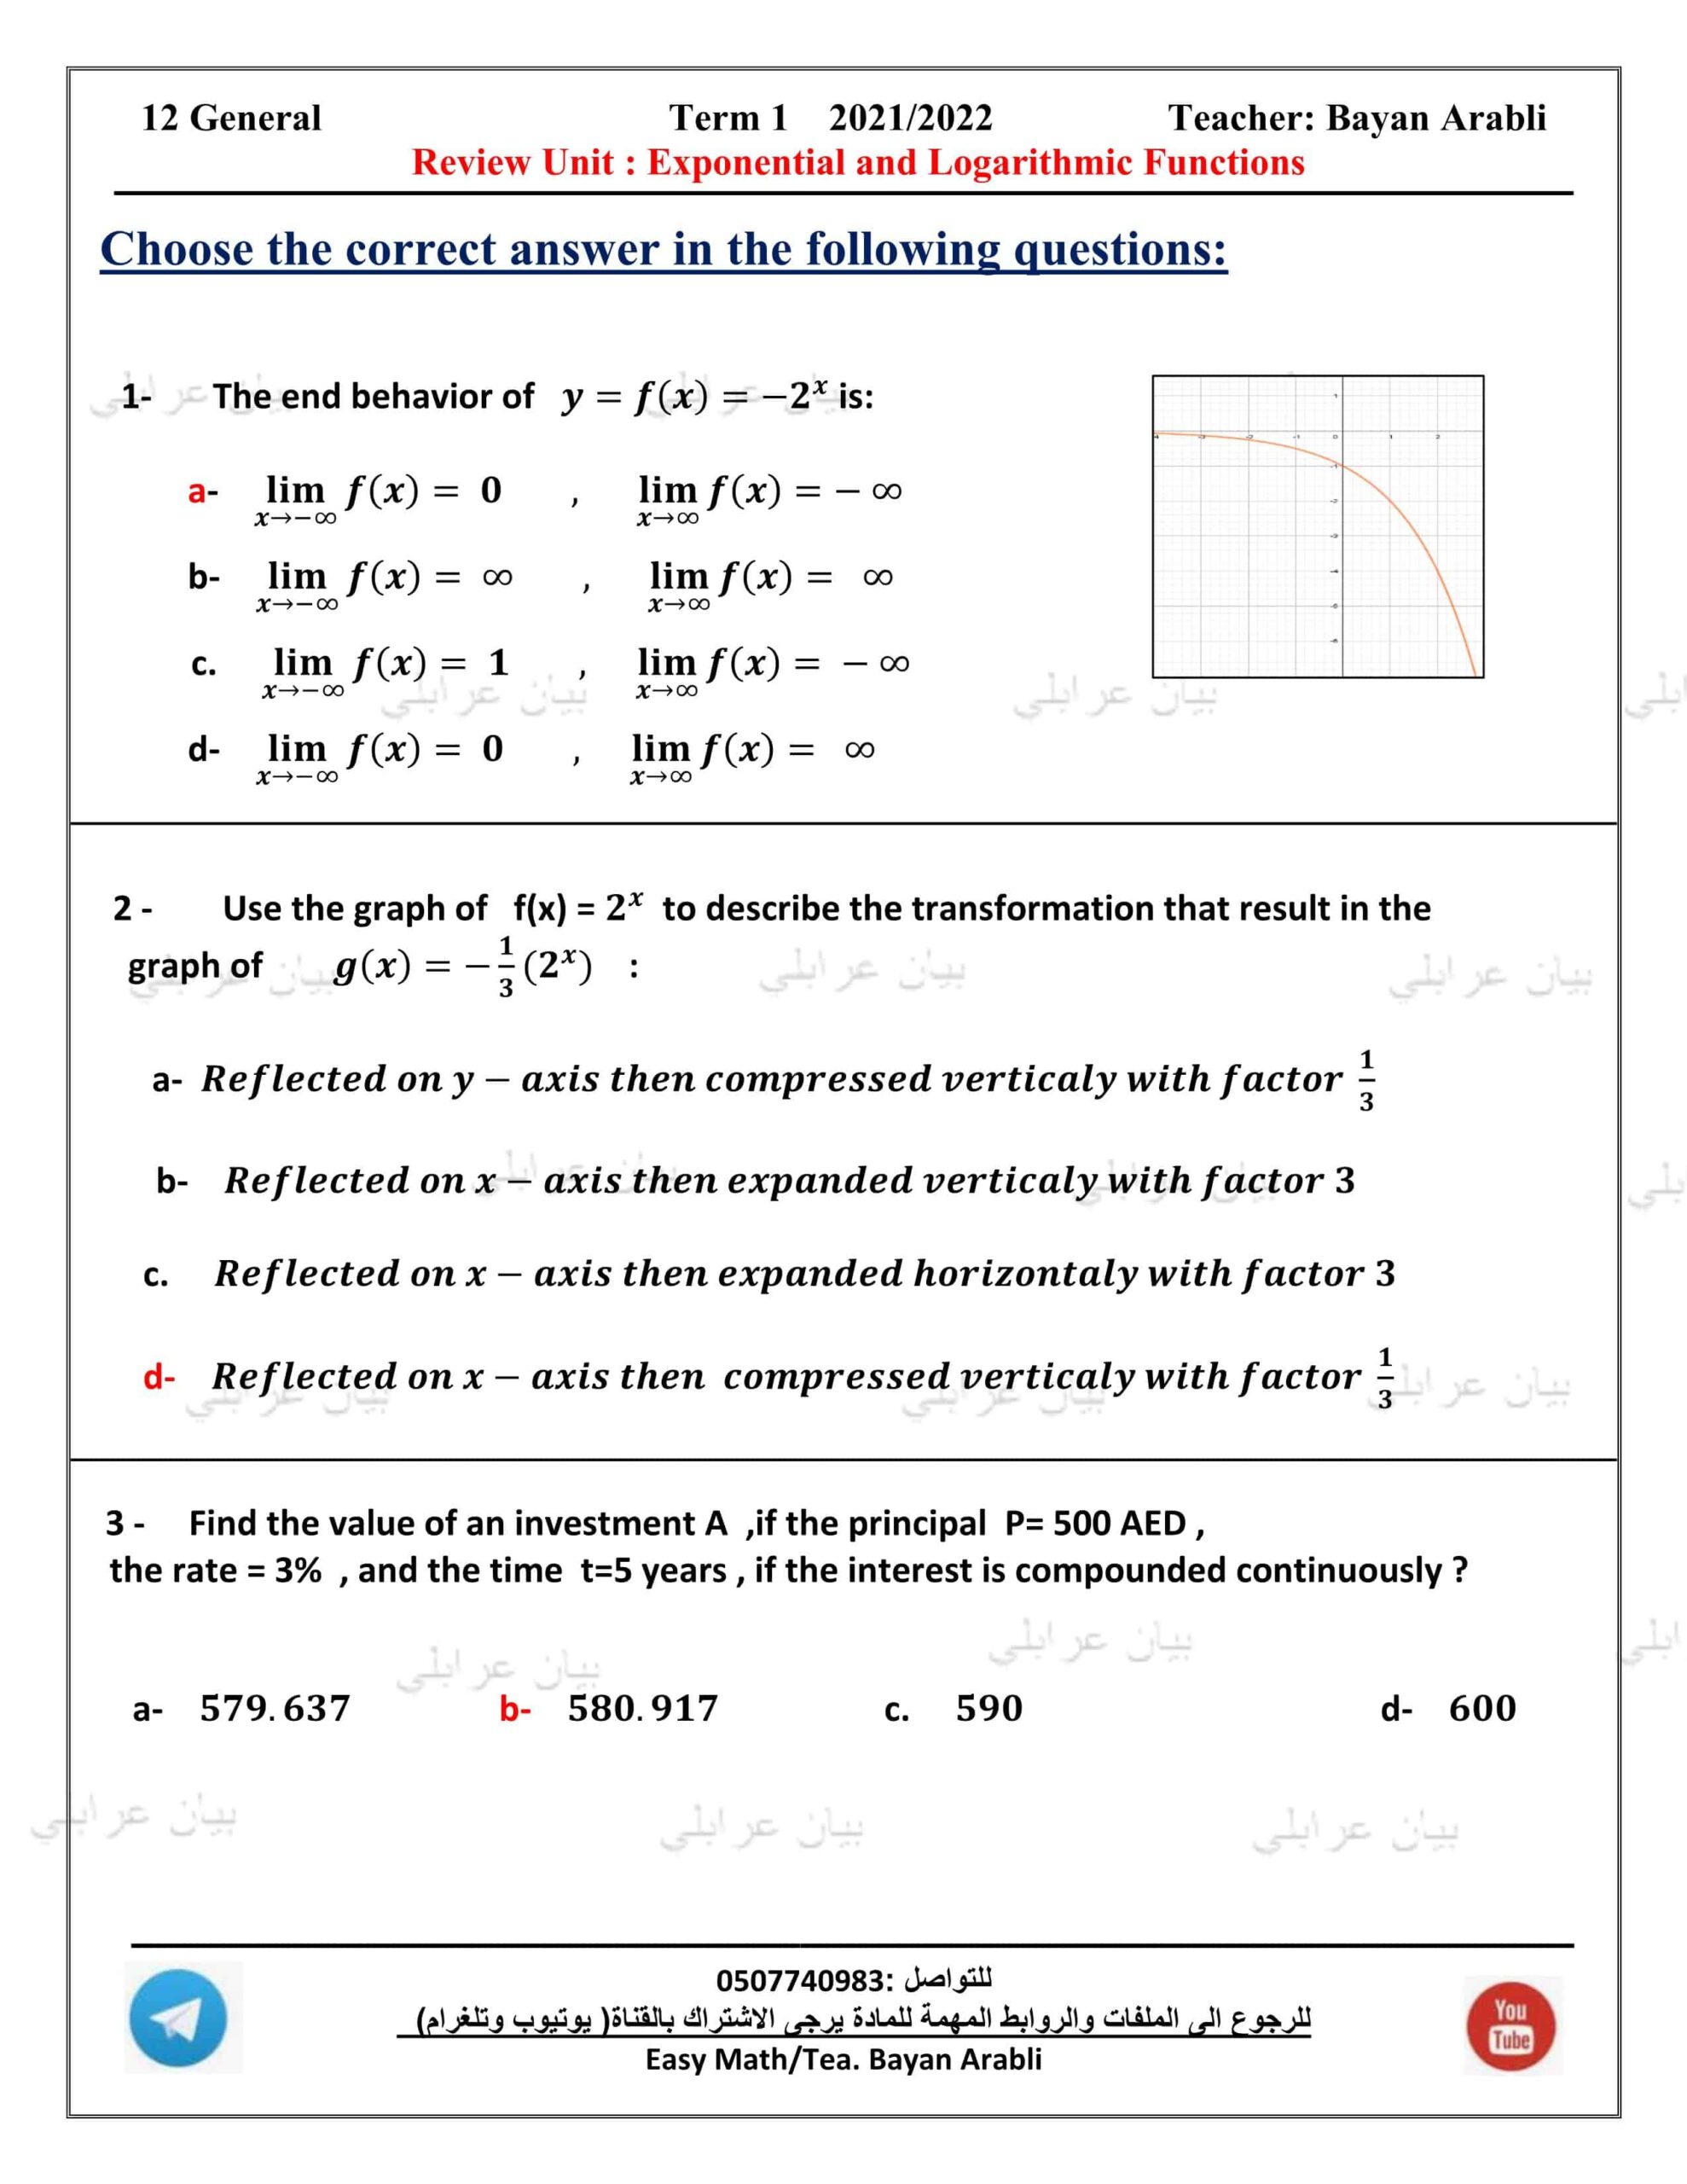 حل أوراق عمل Exponential and Logarithmic Functions بالإنجليزي الصف الثاني عشر عام